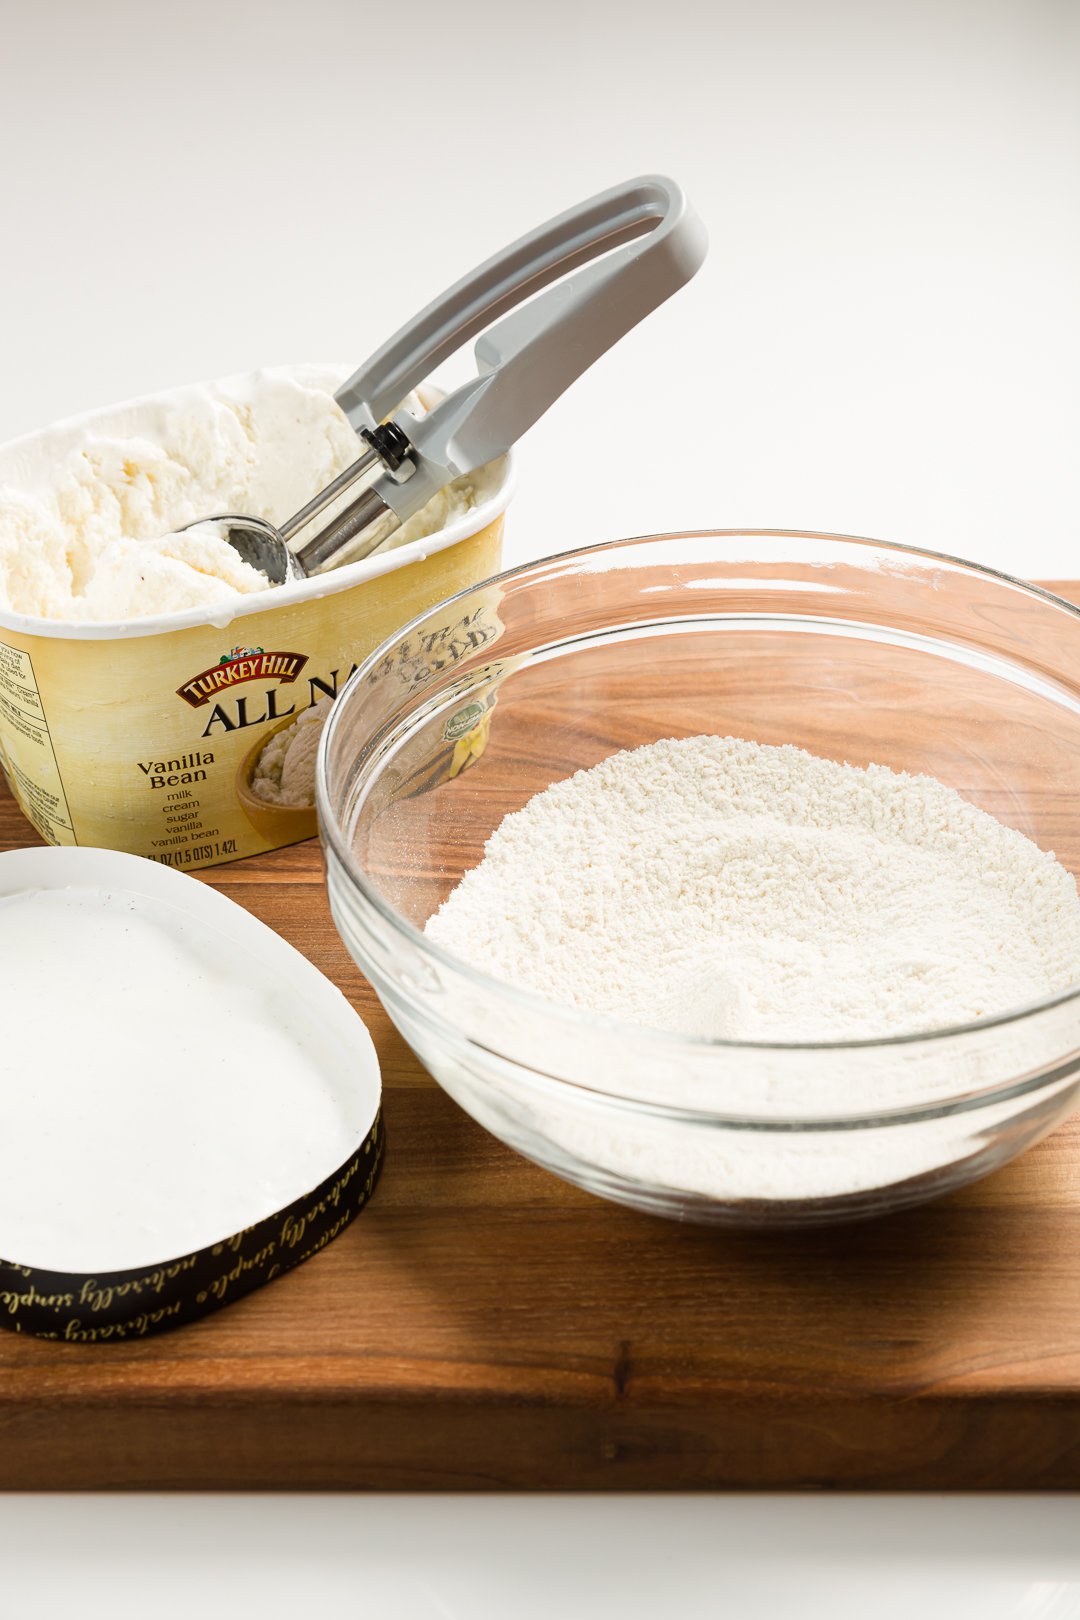 Ice cream and flour